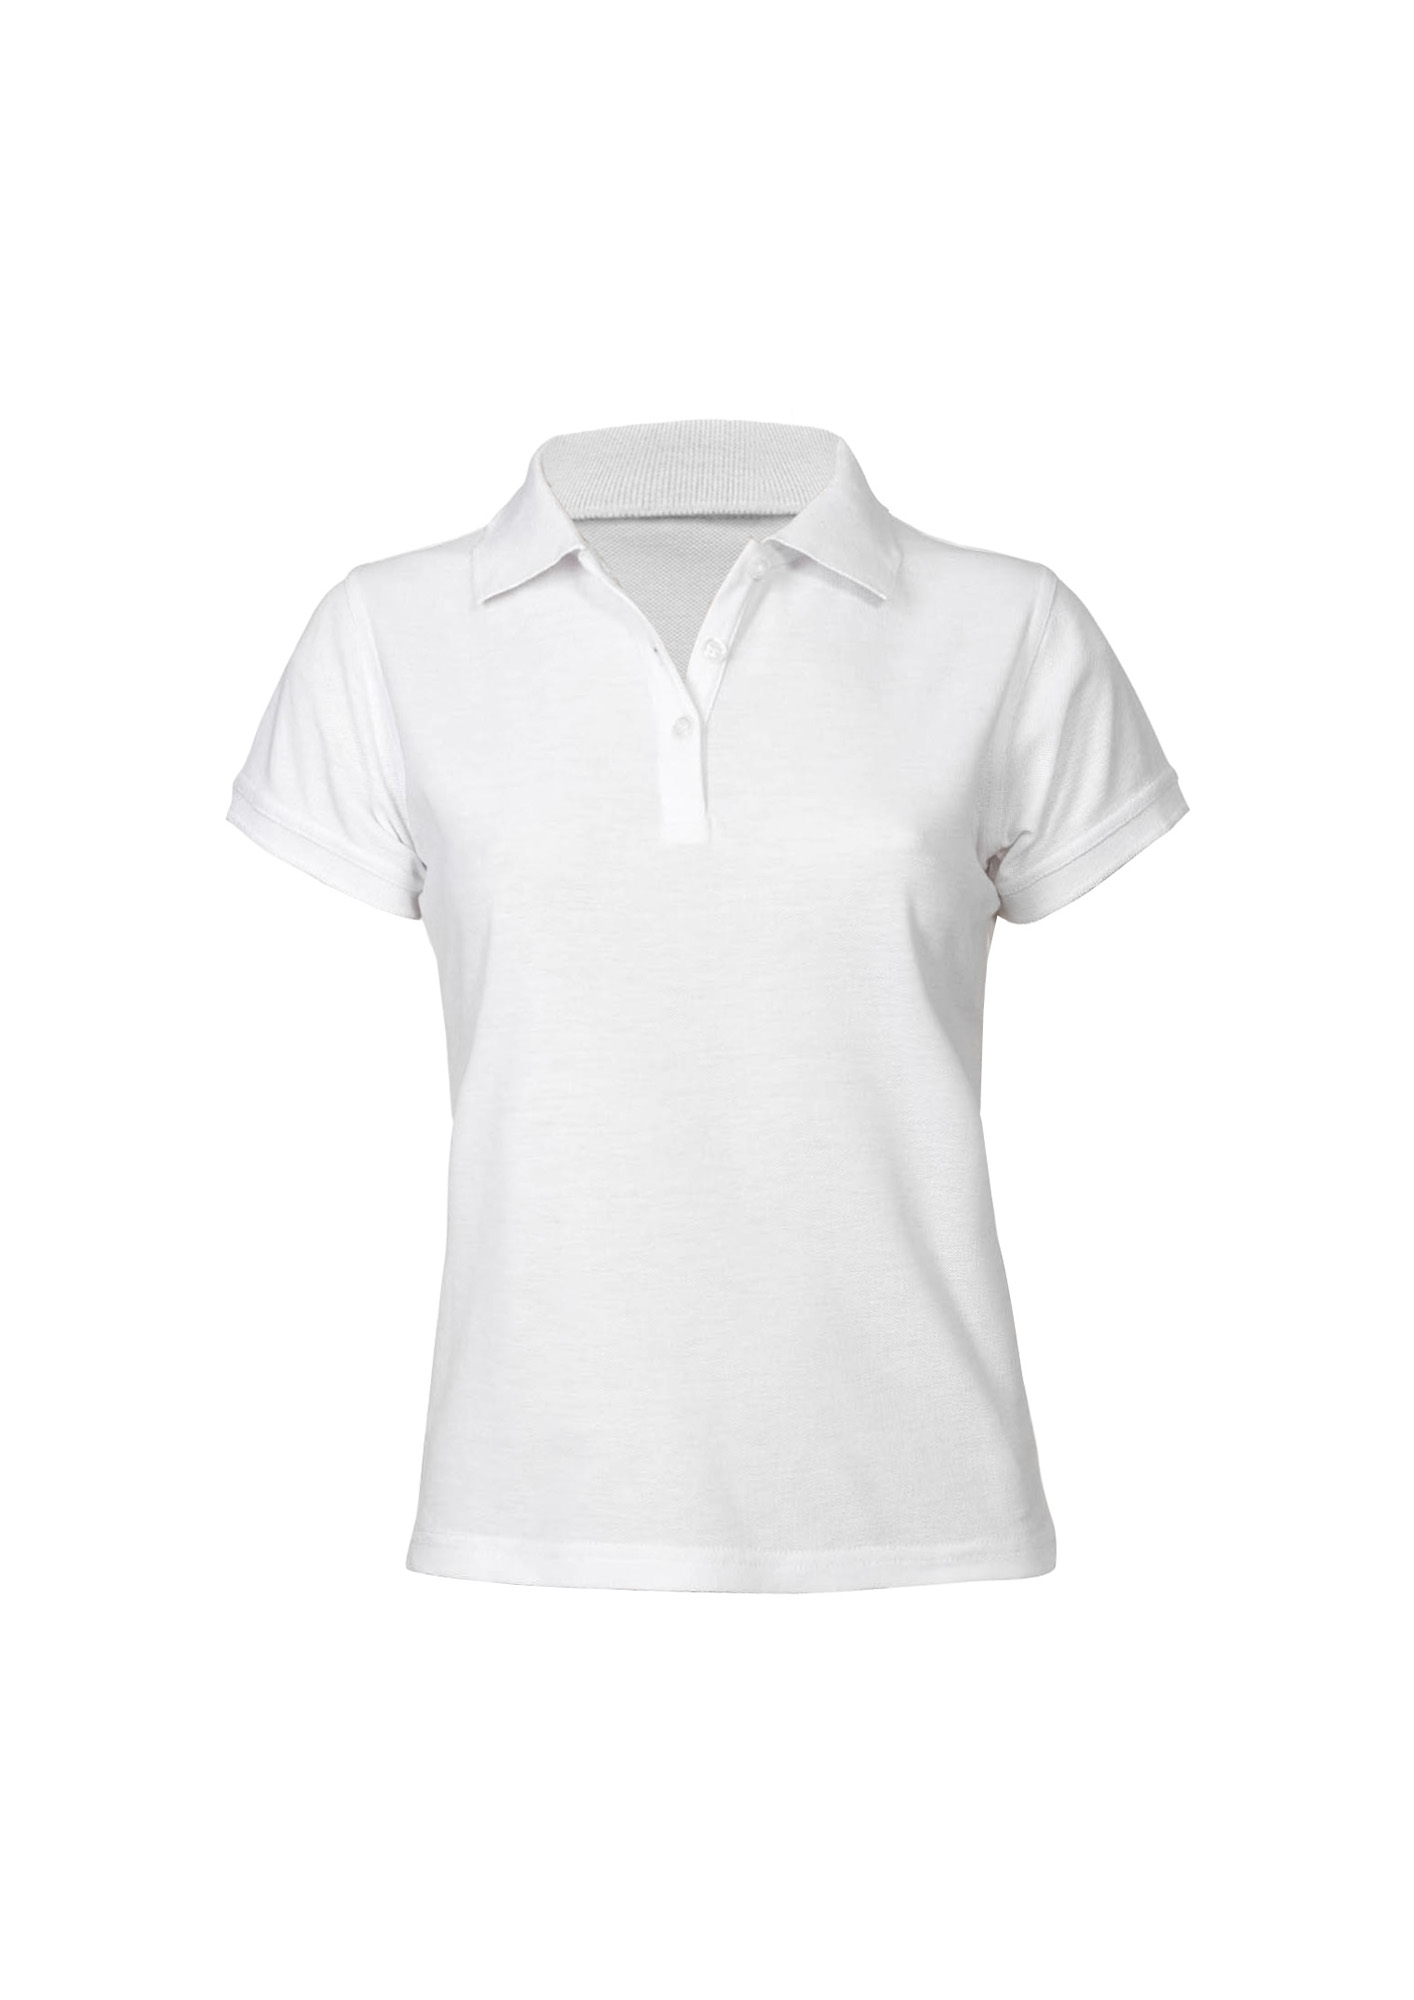 Women's Neon Polo T-Shirts - White | The Uniform Edit